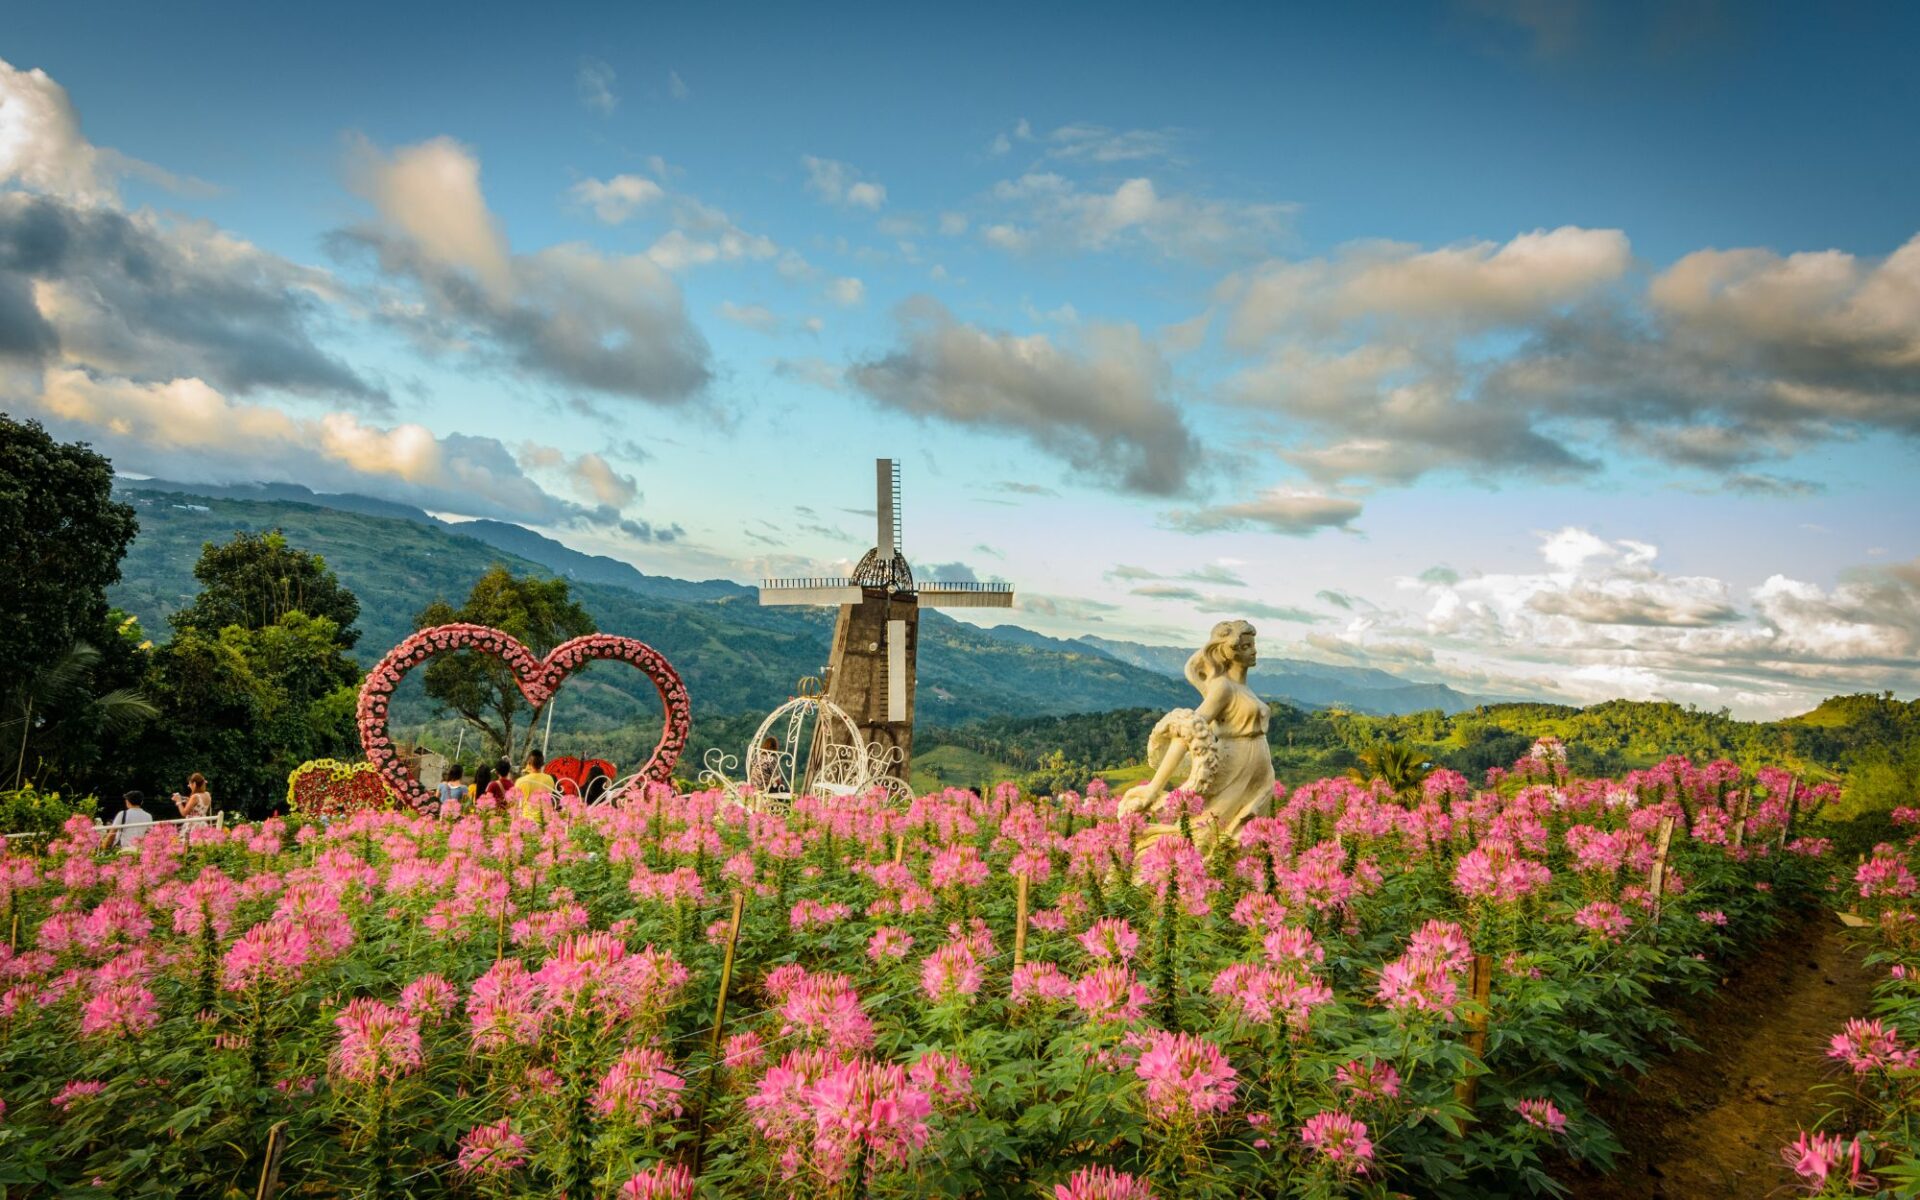 Flowers and windmill at Sirao Gardens, Cebu